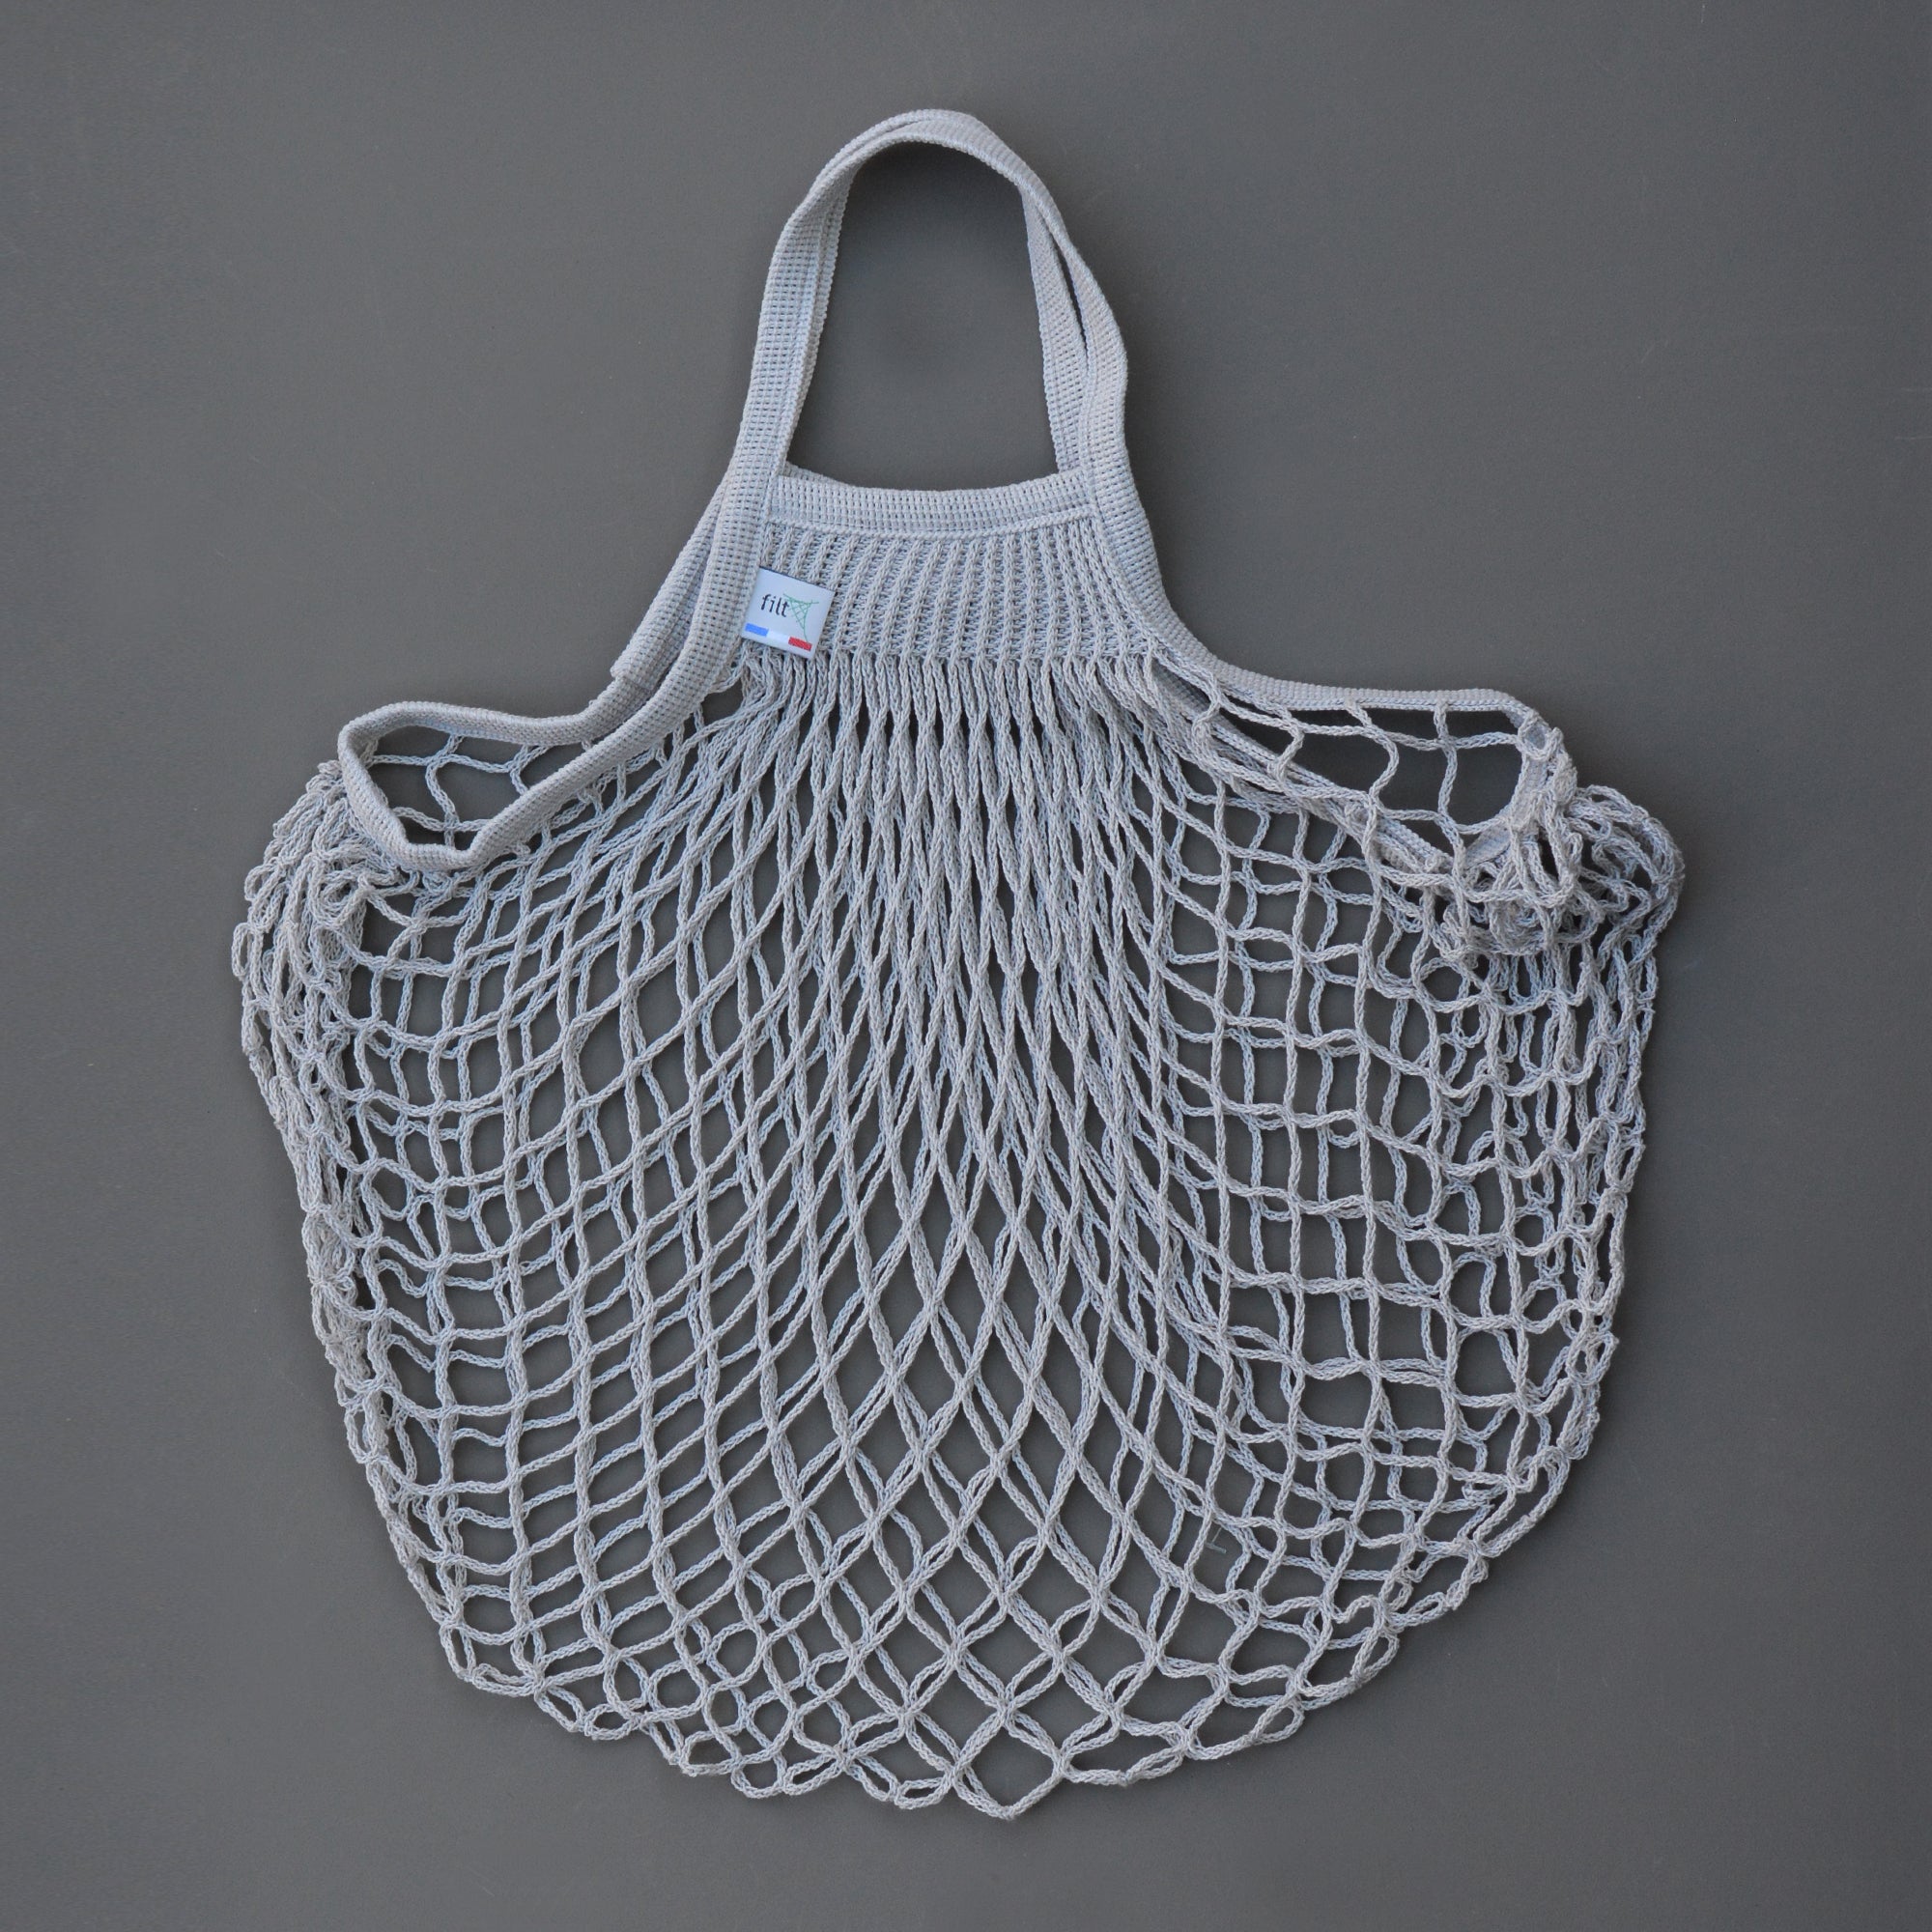 French String Bag in Grey